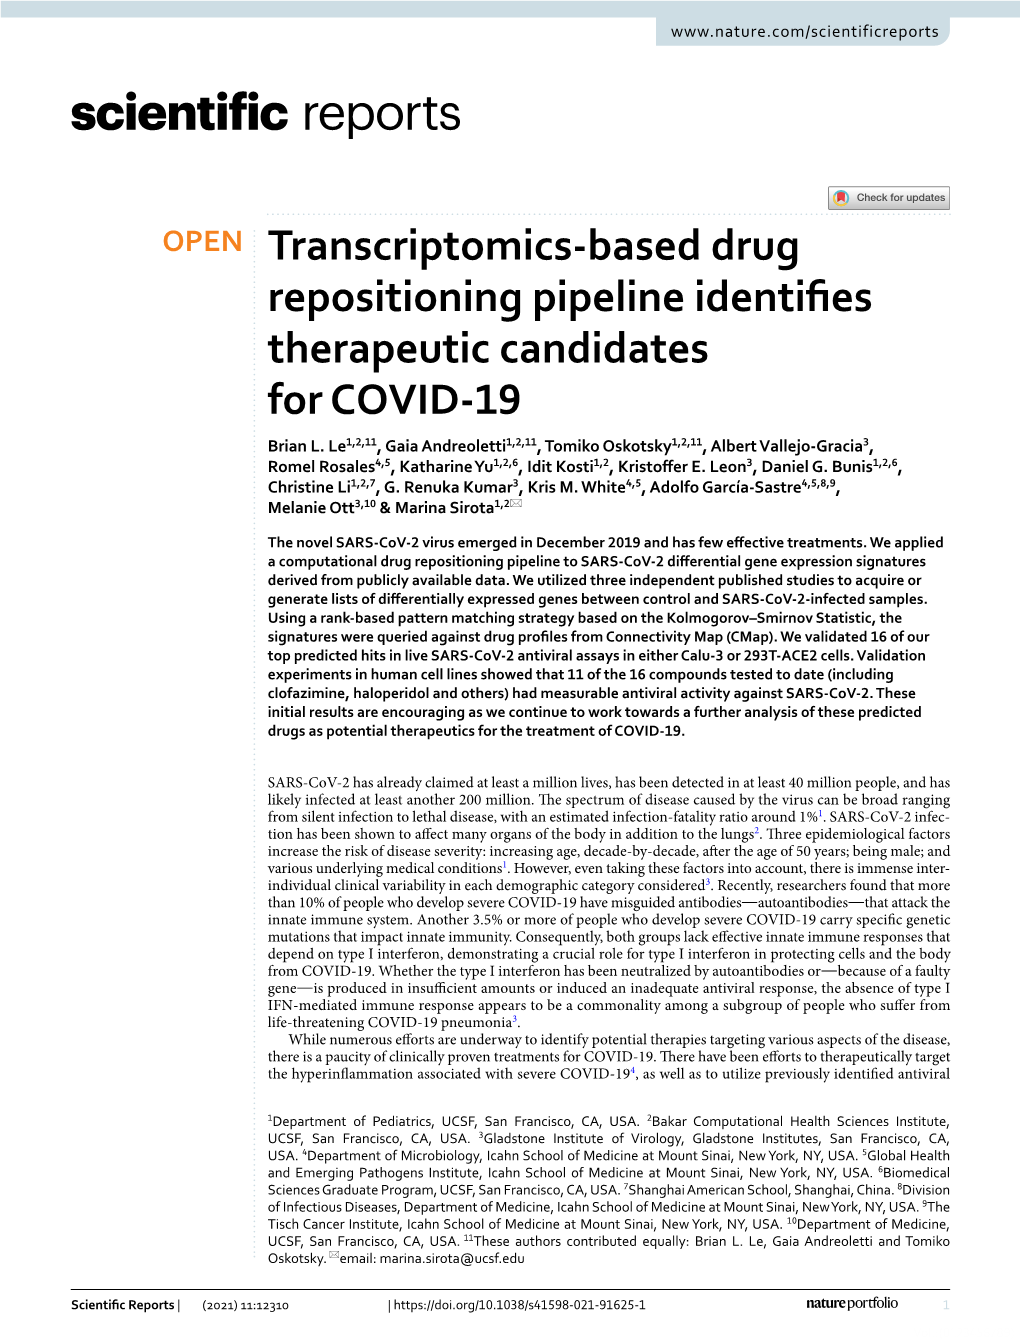 Transcriptomics-Based Drug Repositioning Pipeline Identifies